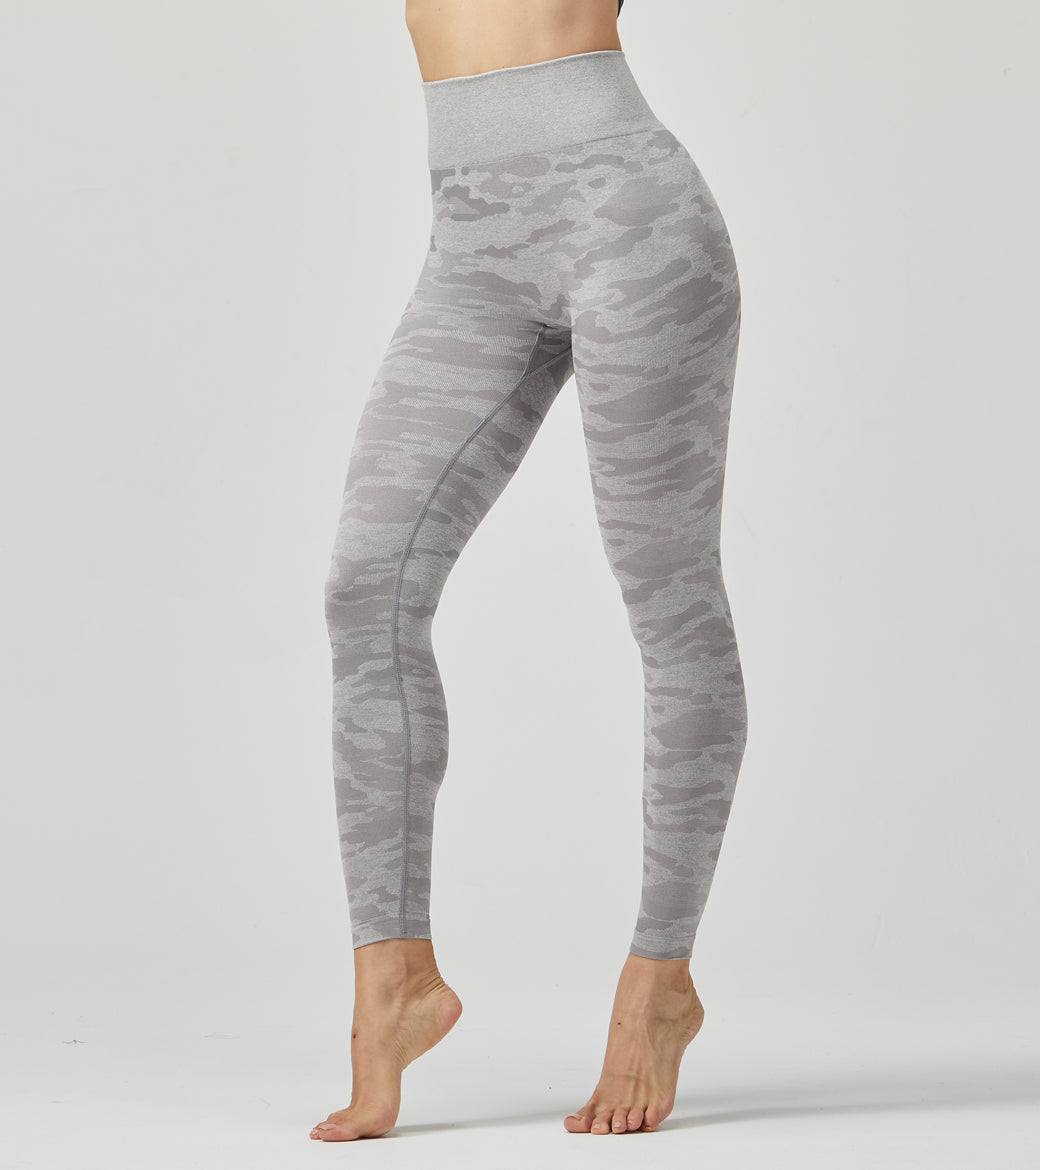 LOVESOFT Women's Light Grey Camo Seamless Leggings High Waist Hip-lifting Pants